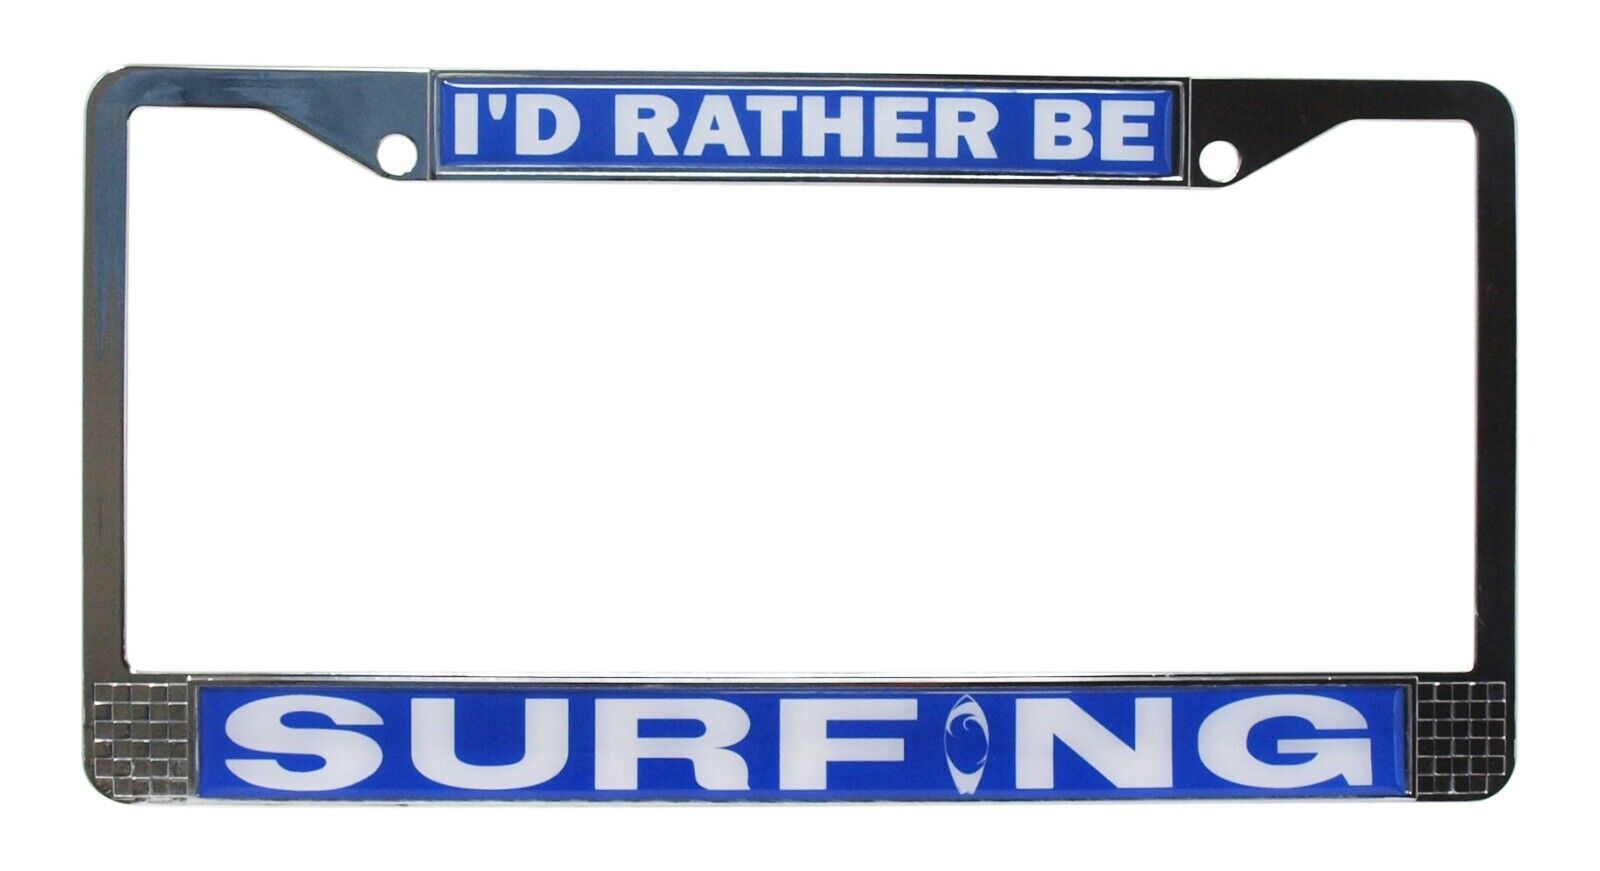 I'd Rather Be Surfing License Plate Frame